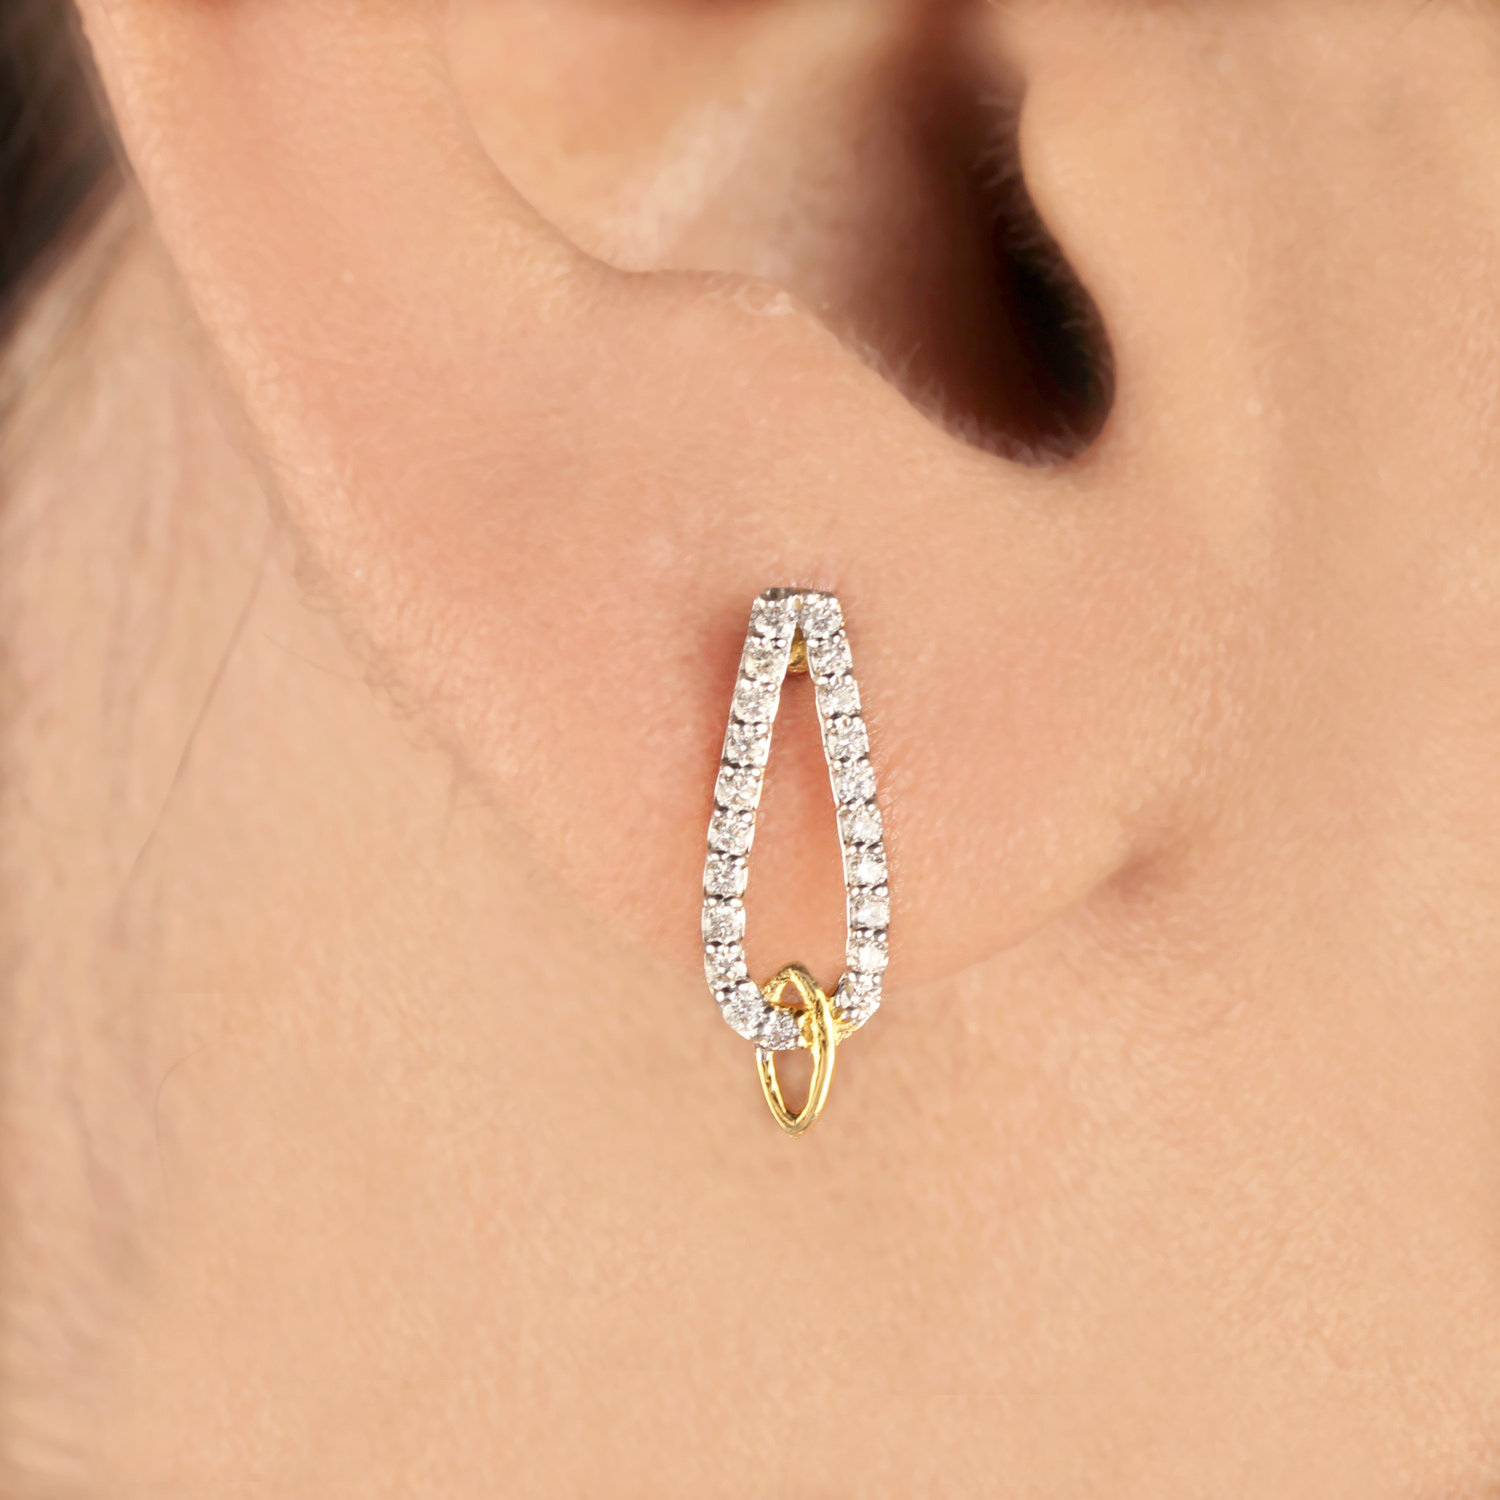 Glamorous Gold Earring with Diamonds